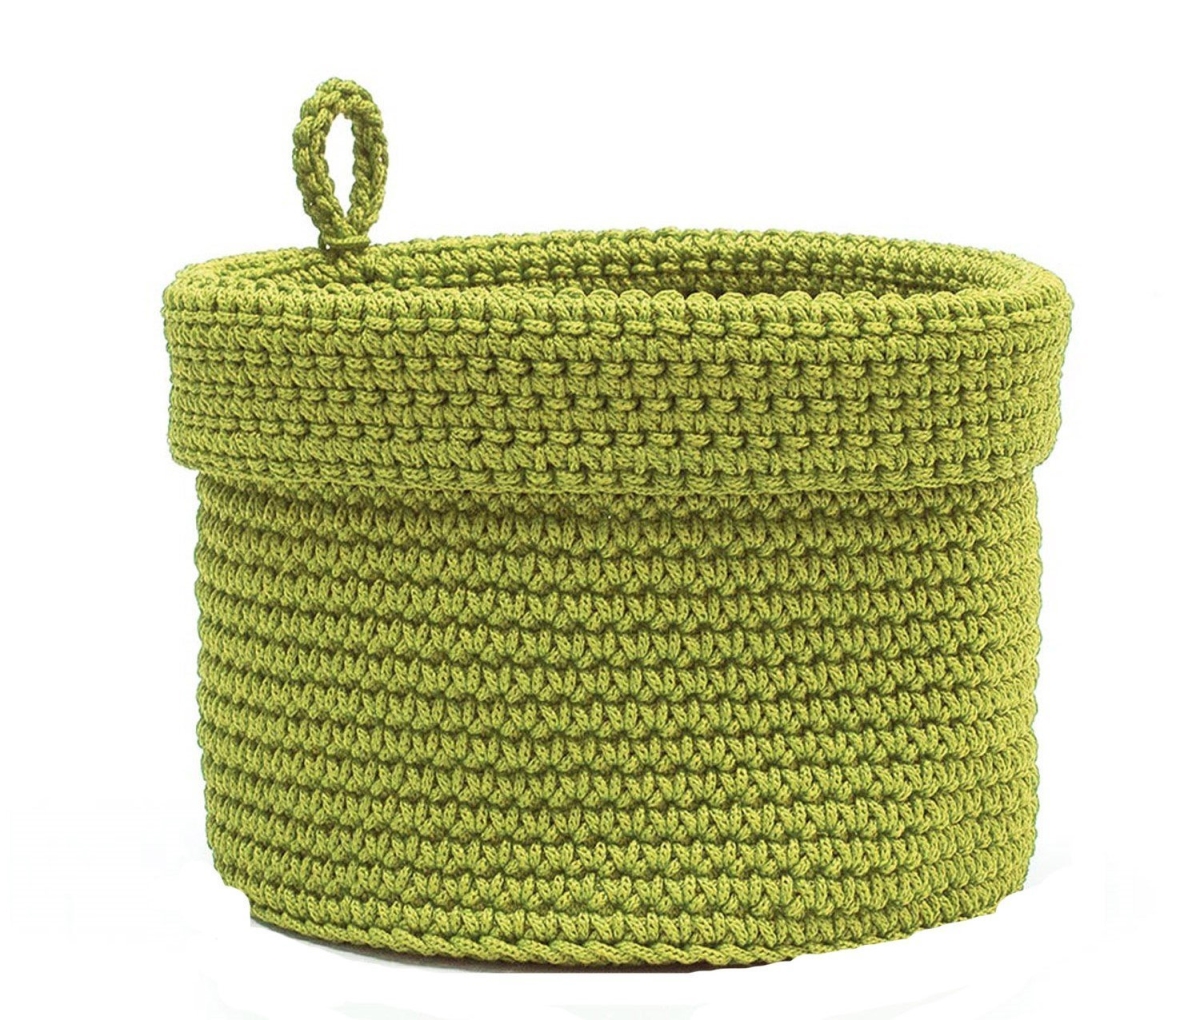 Mc-1035cg Mode Crochet 8 X 8 In. Basket With Loop - Citron Green